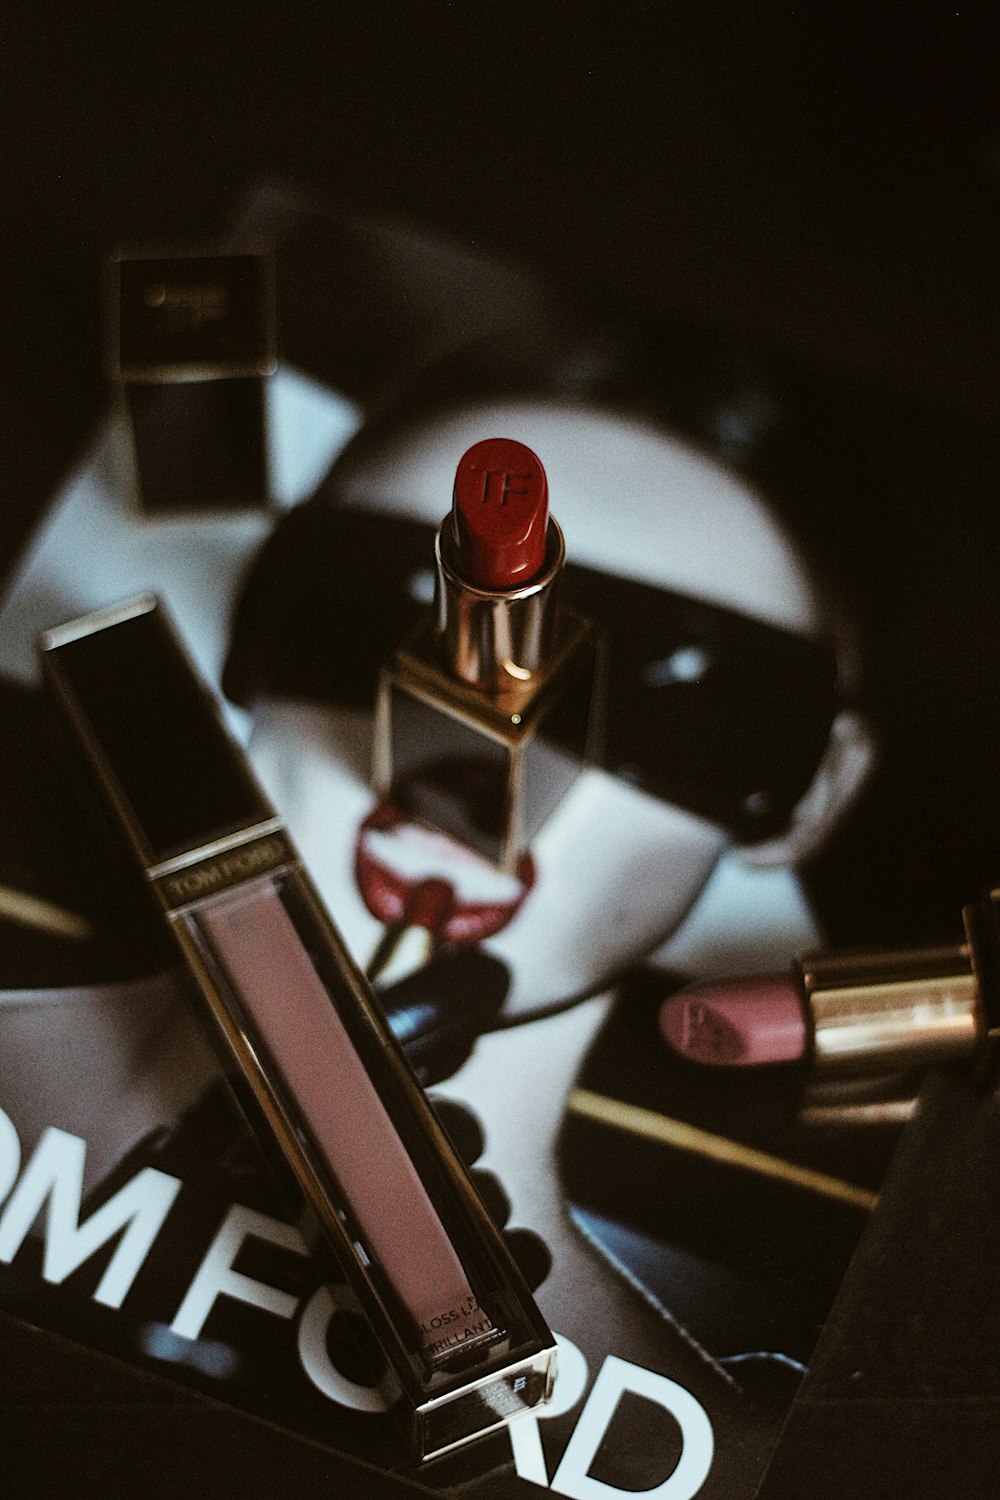 red lipstick beside red lipstick